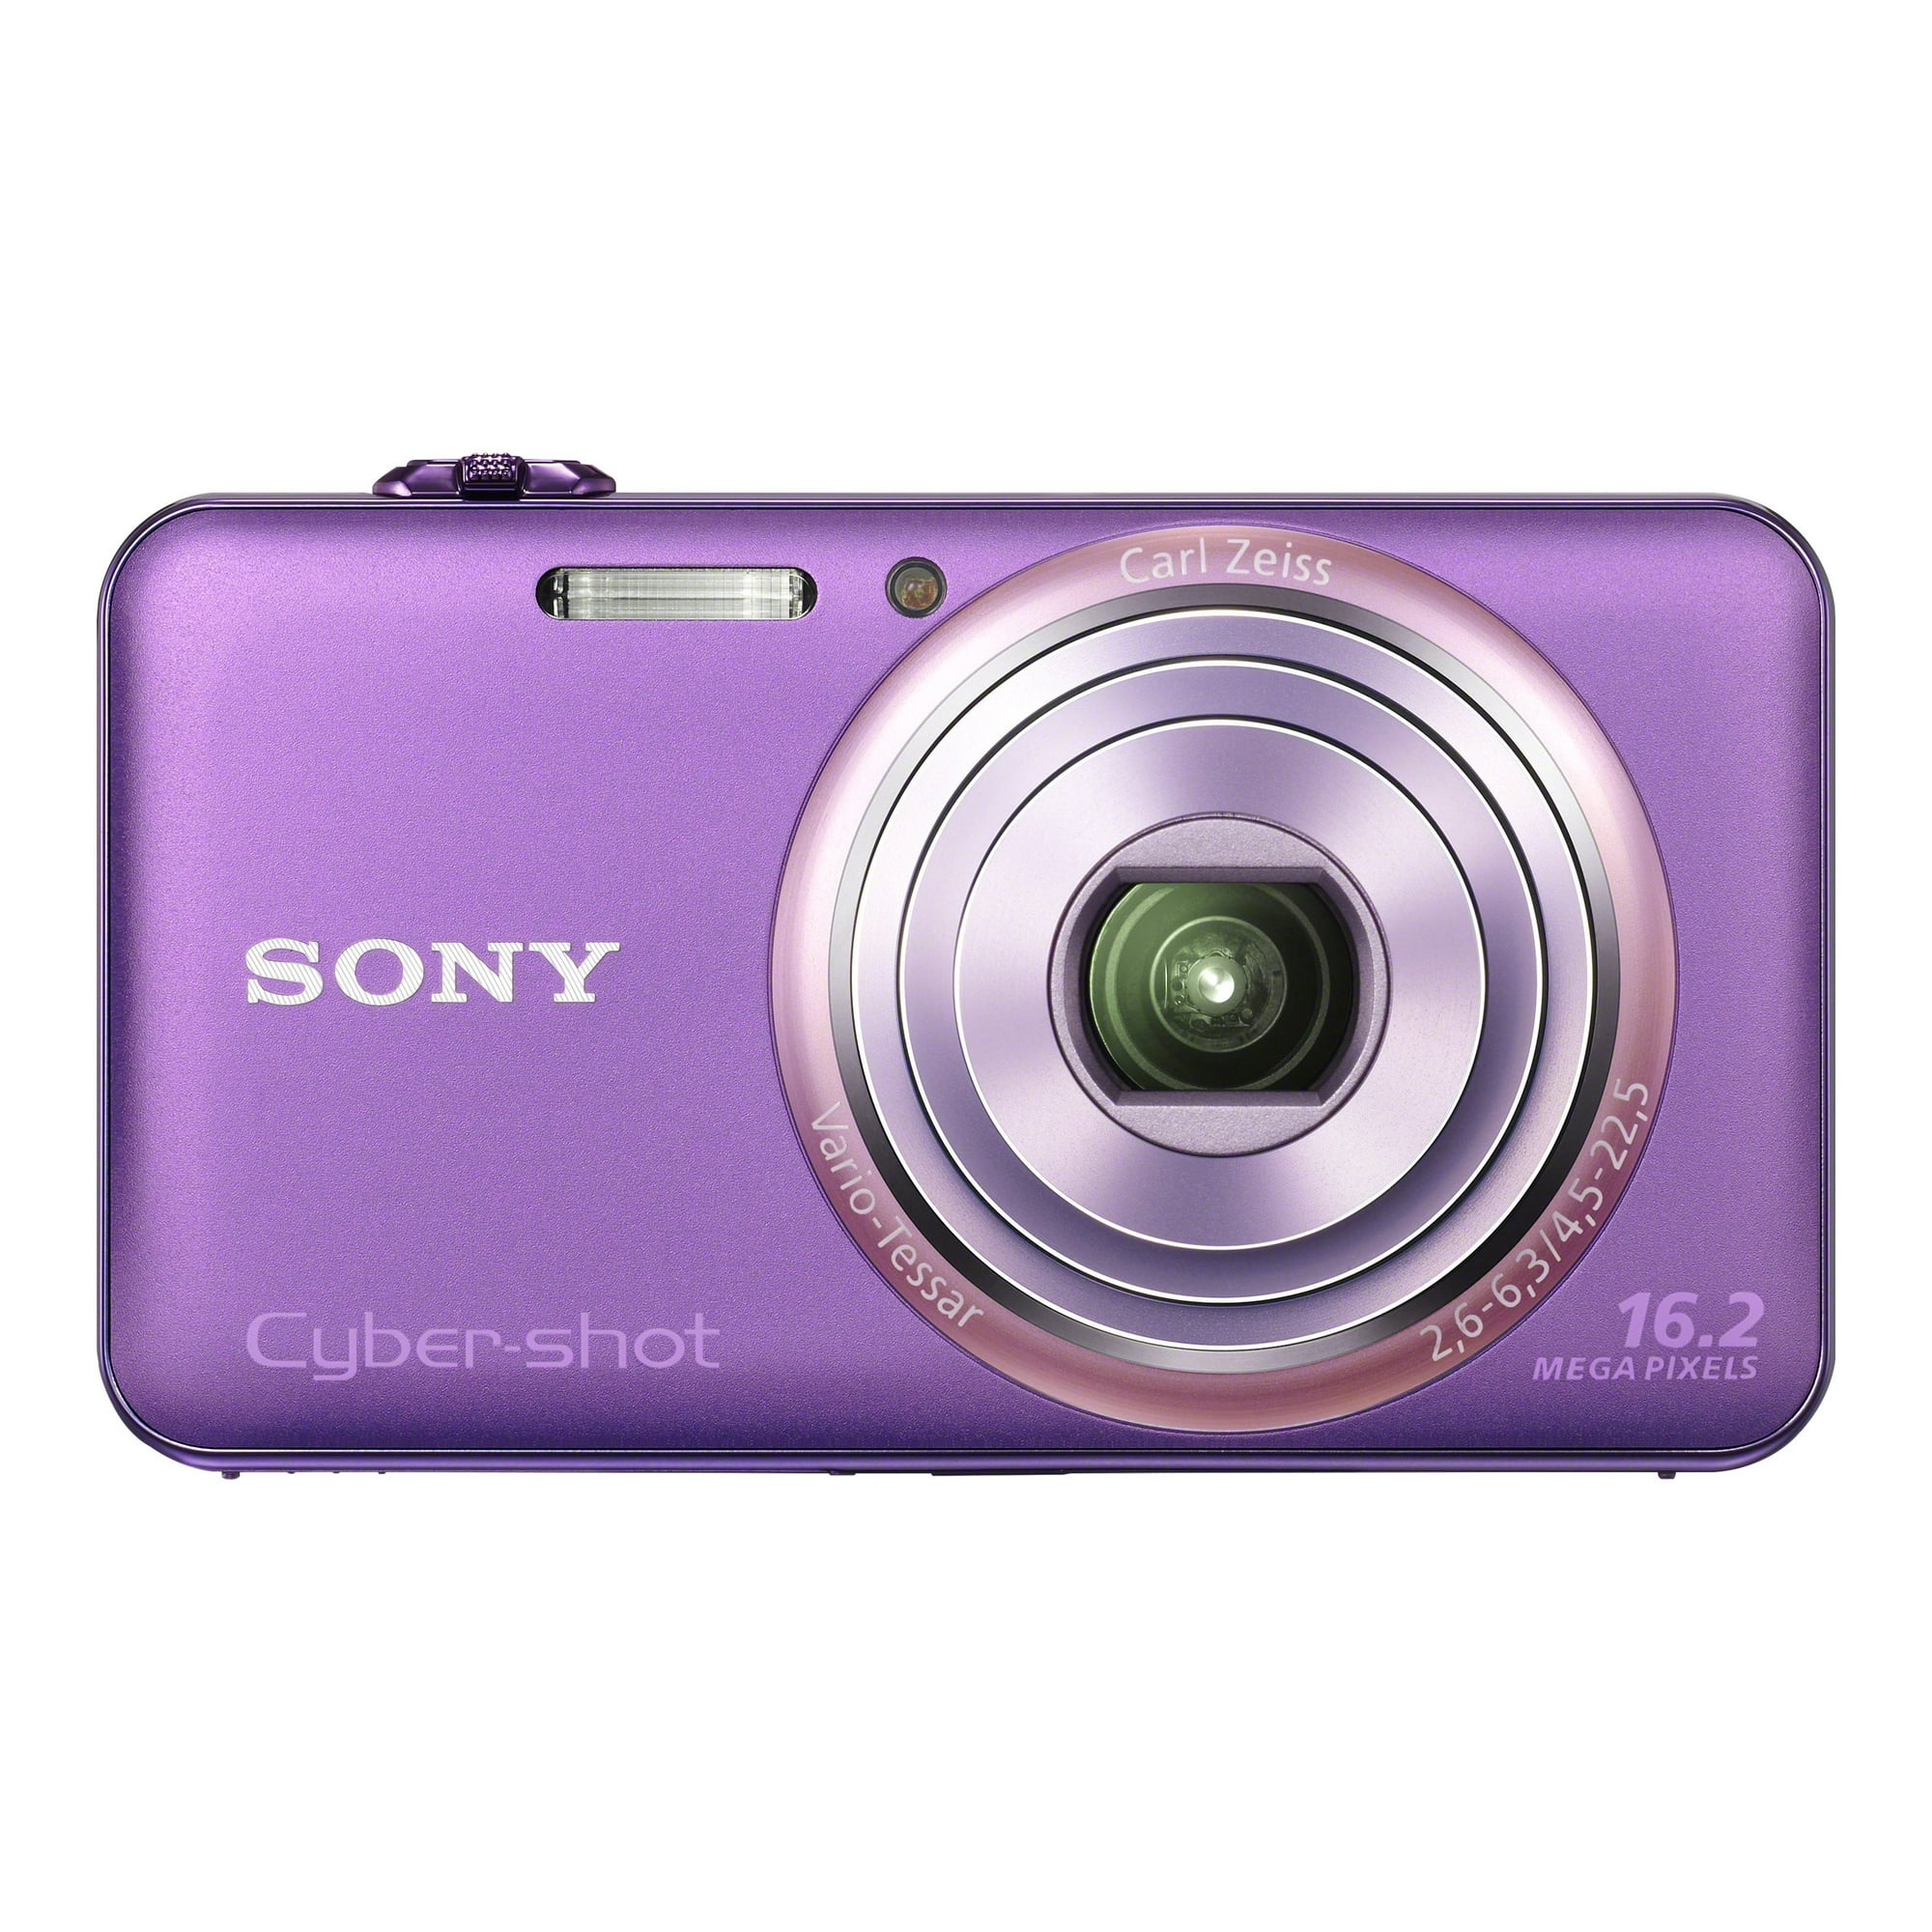 sony digital camera 16 megapixel